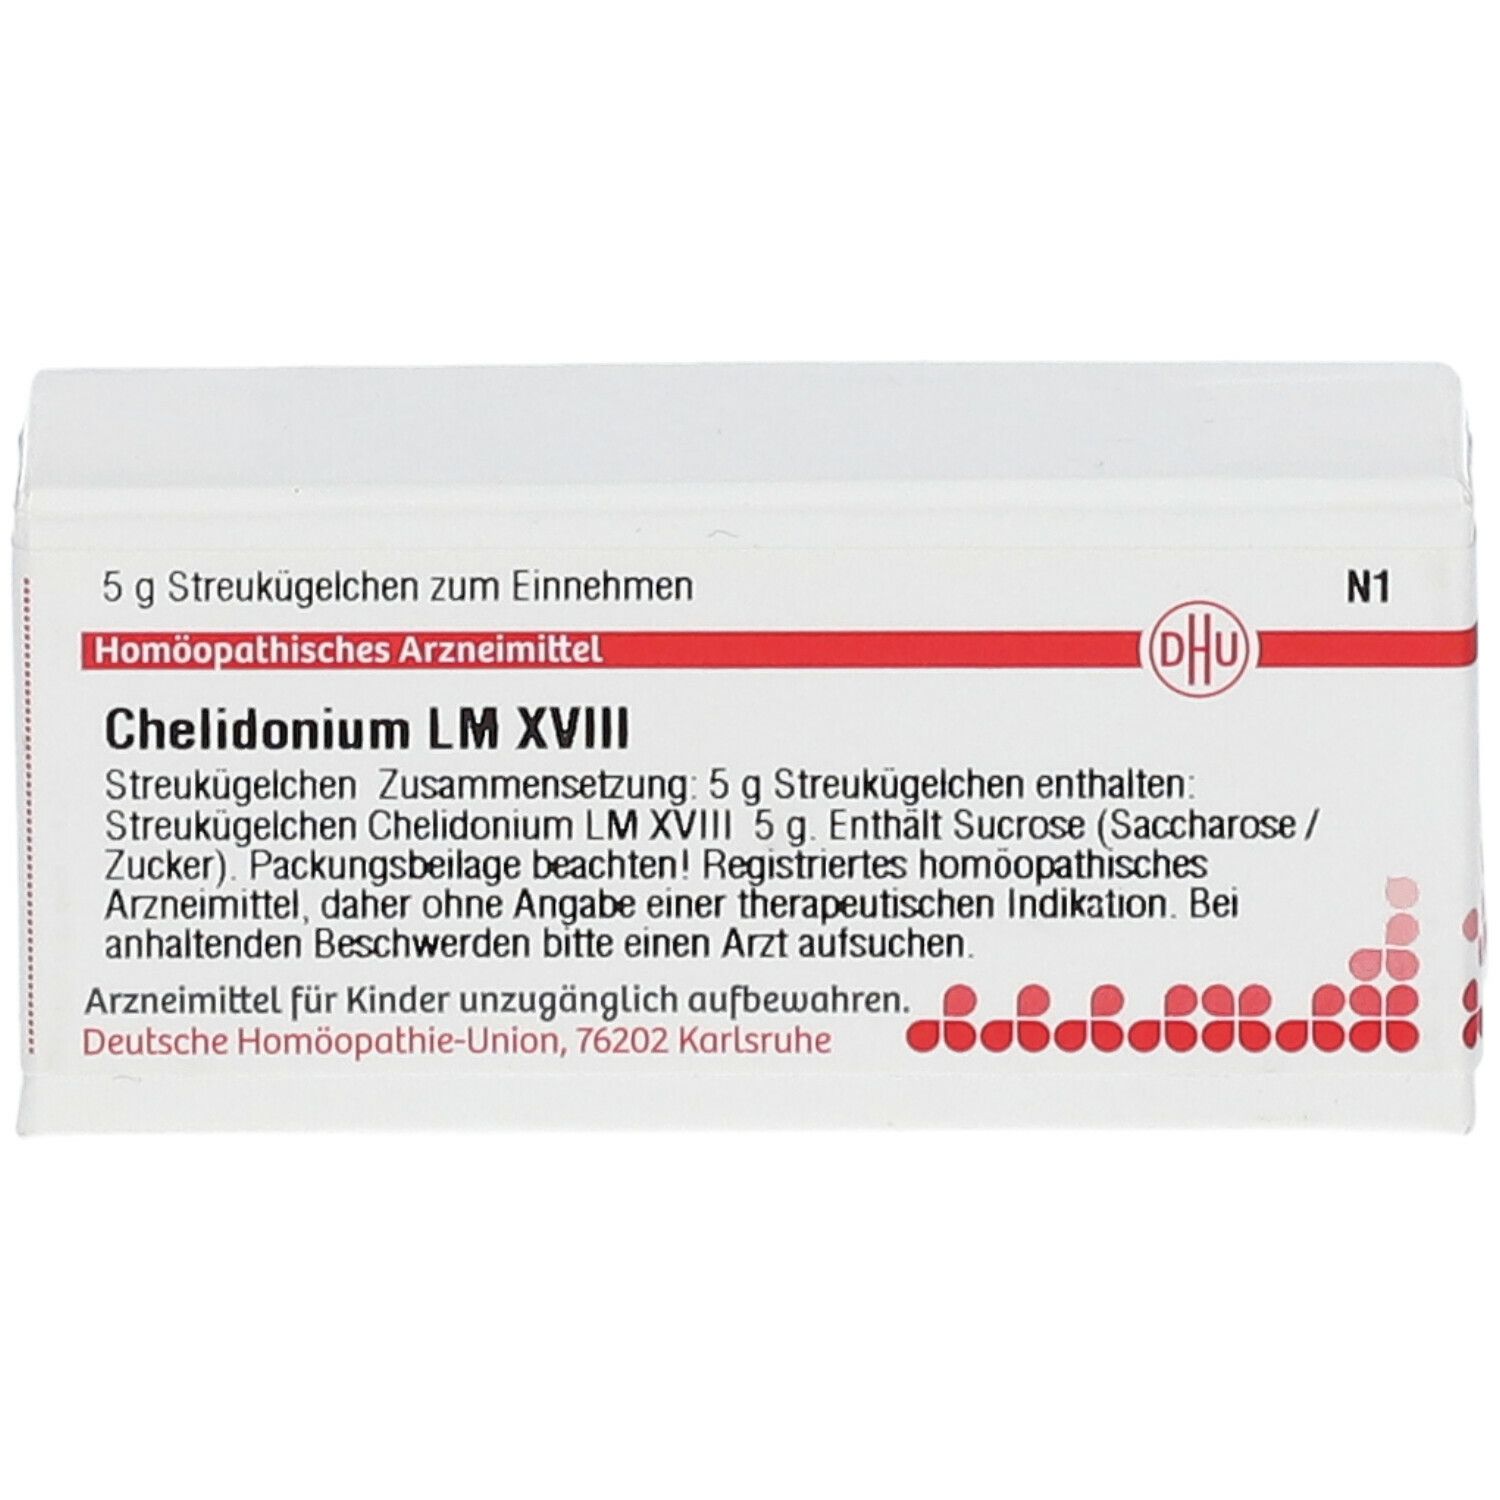 DHU Chelidonium LM XVIII